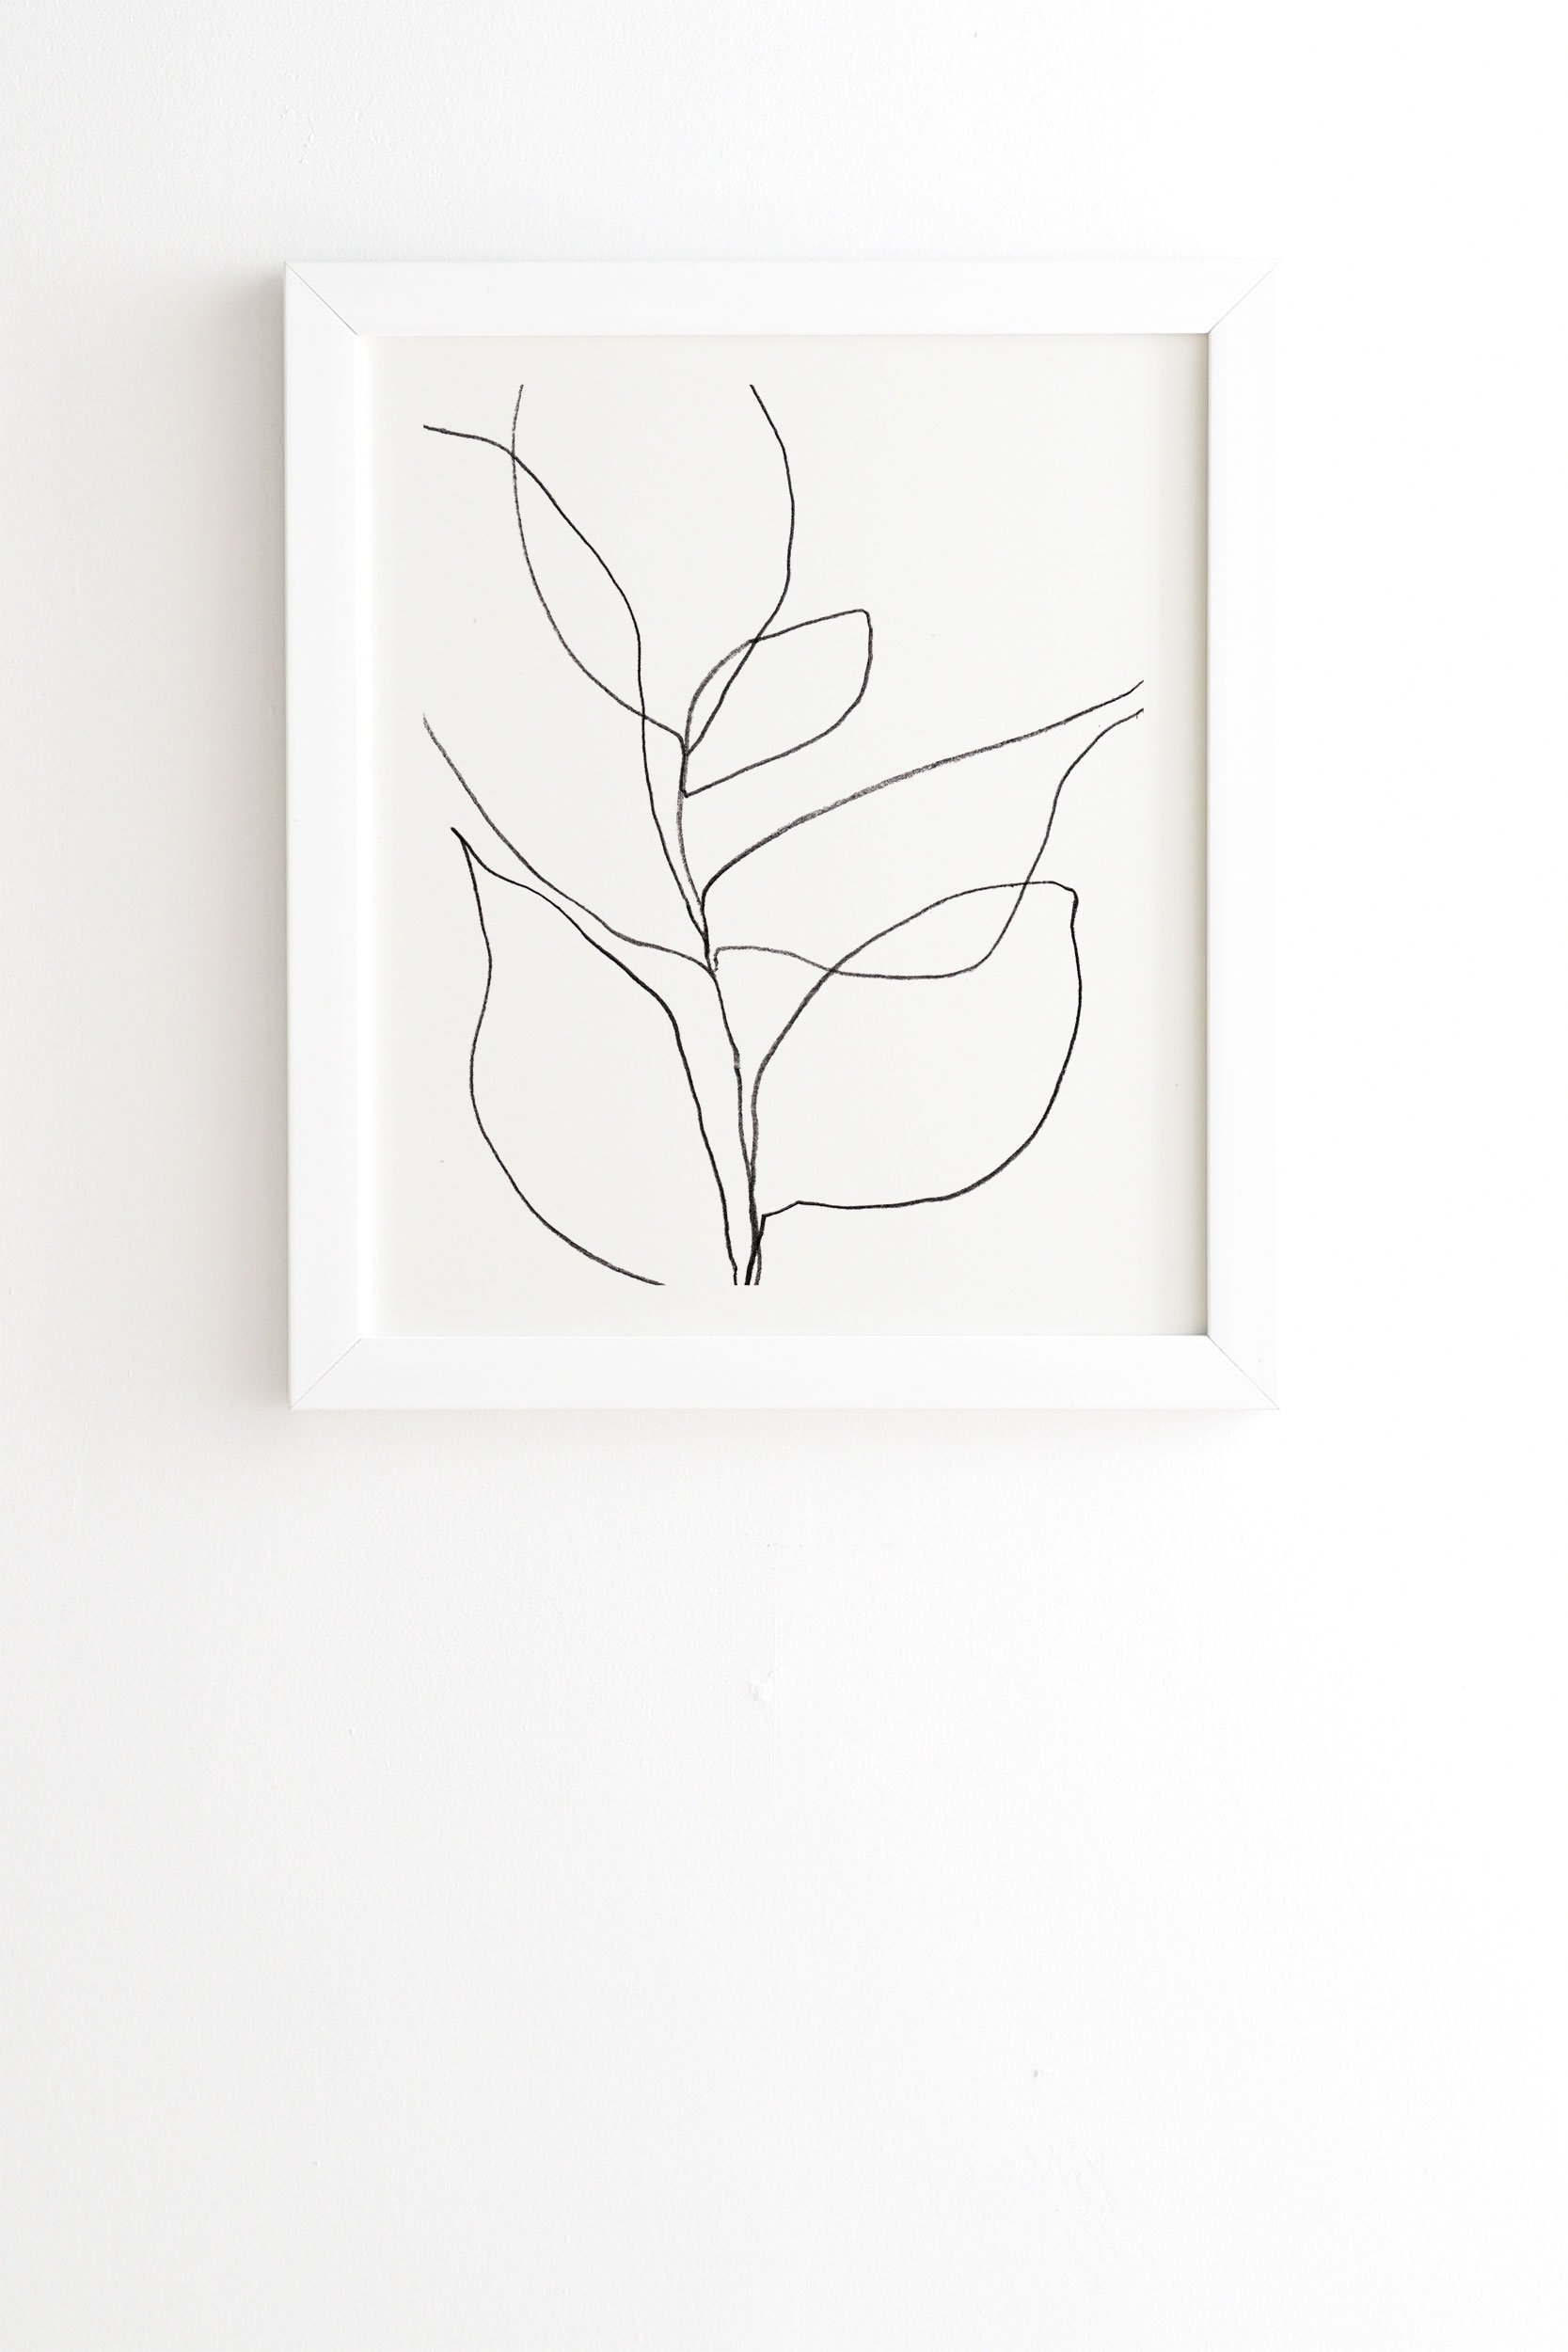 Minimalist Line Art Plant Drawing by GalleryJ9, White Frame, 19" x 22.4" - Image 0